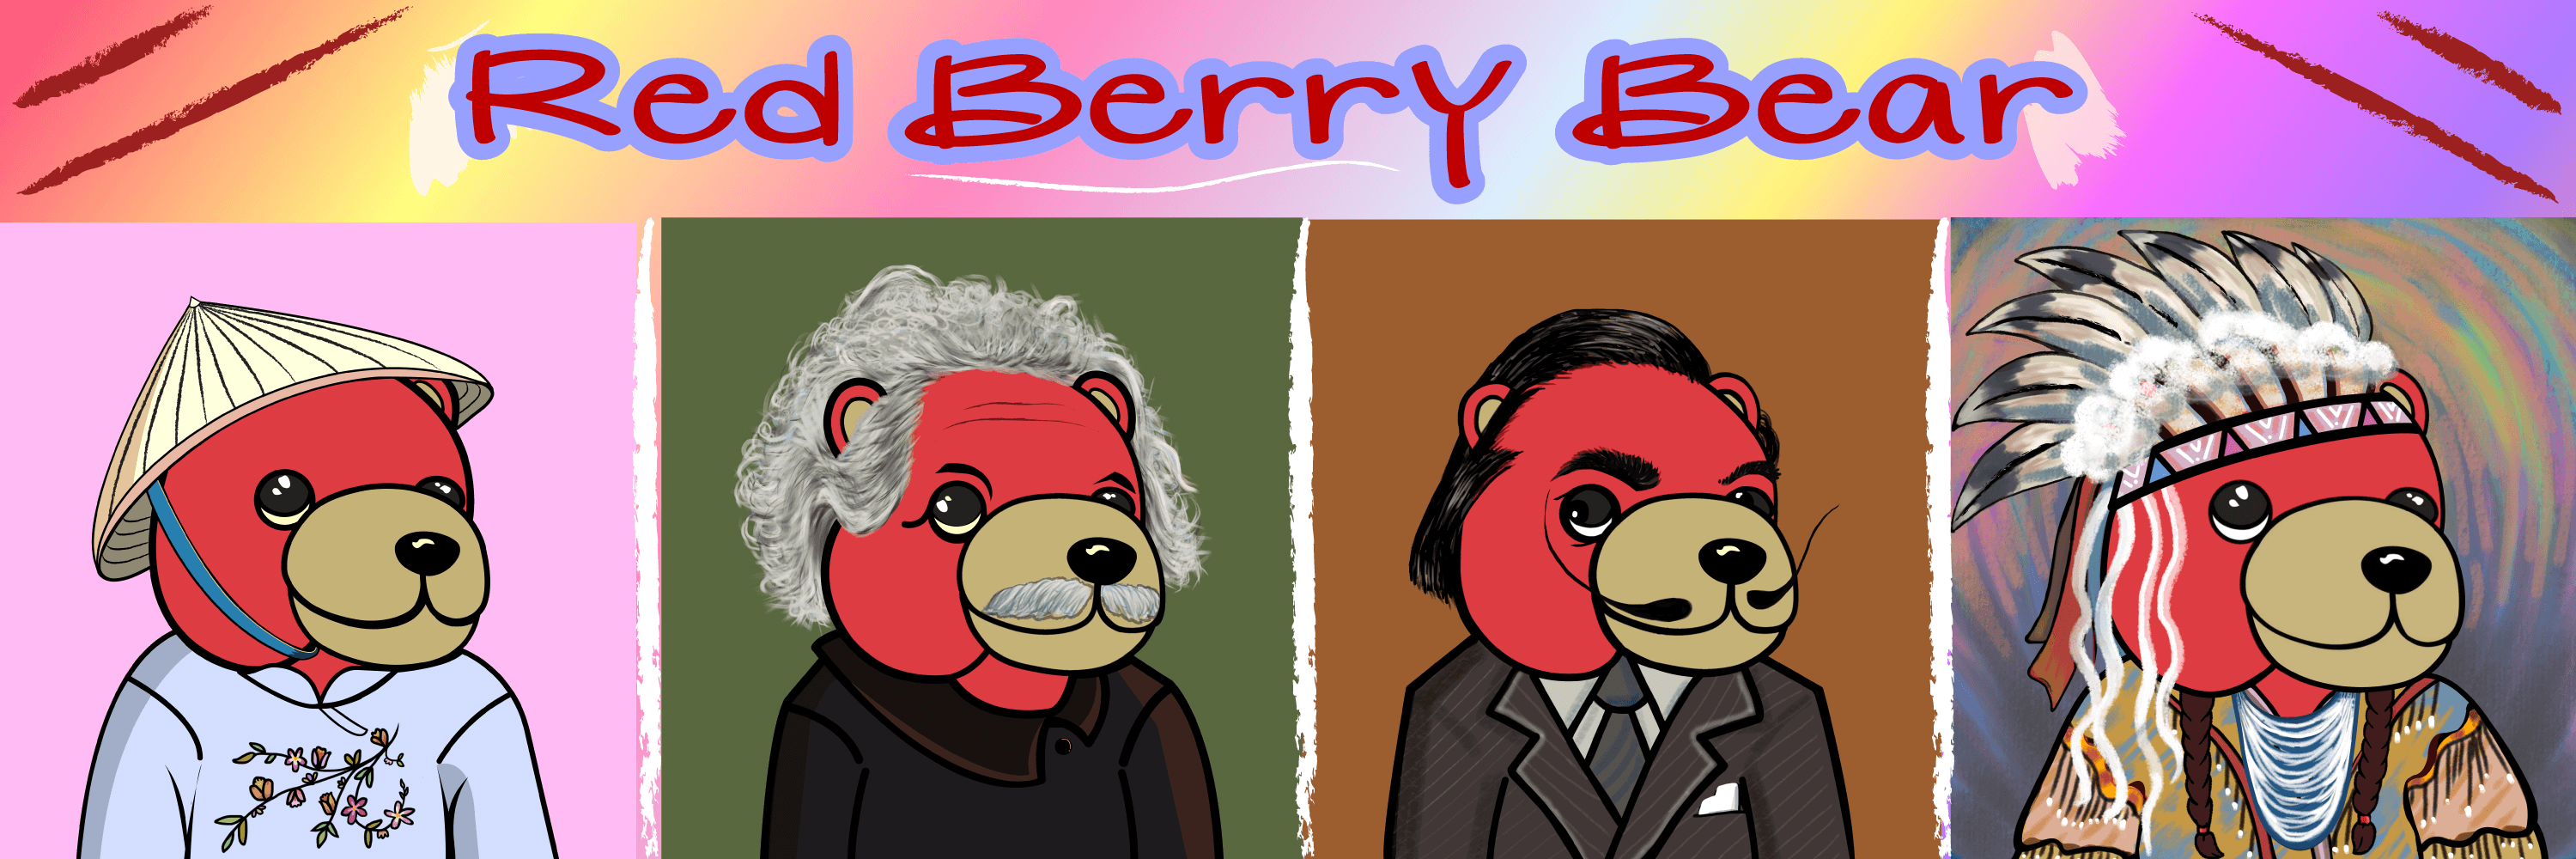 Red_Berry_Bear bannière